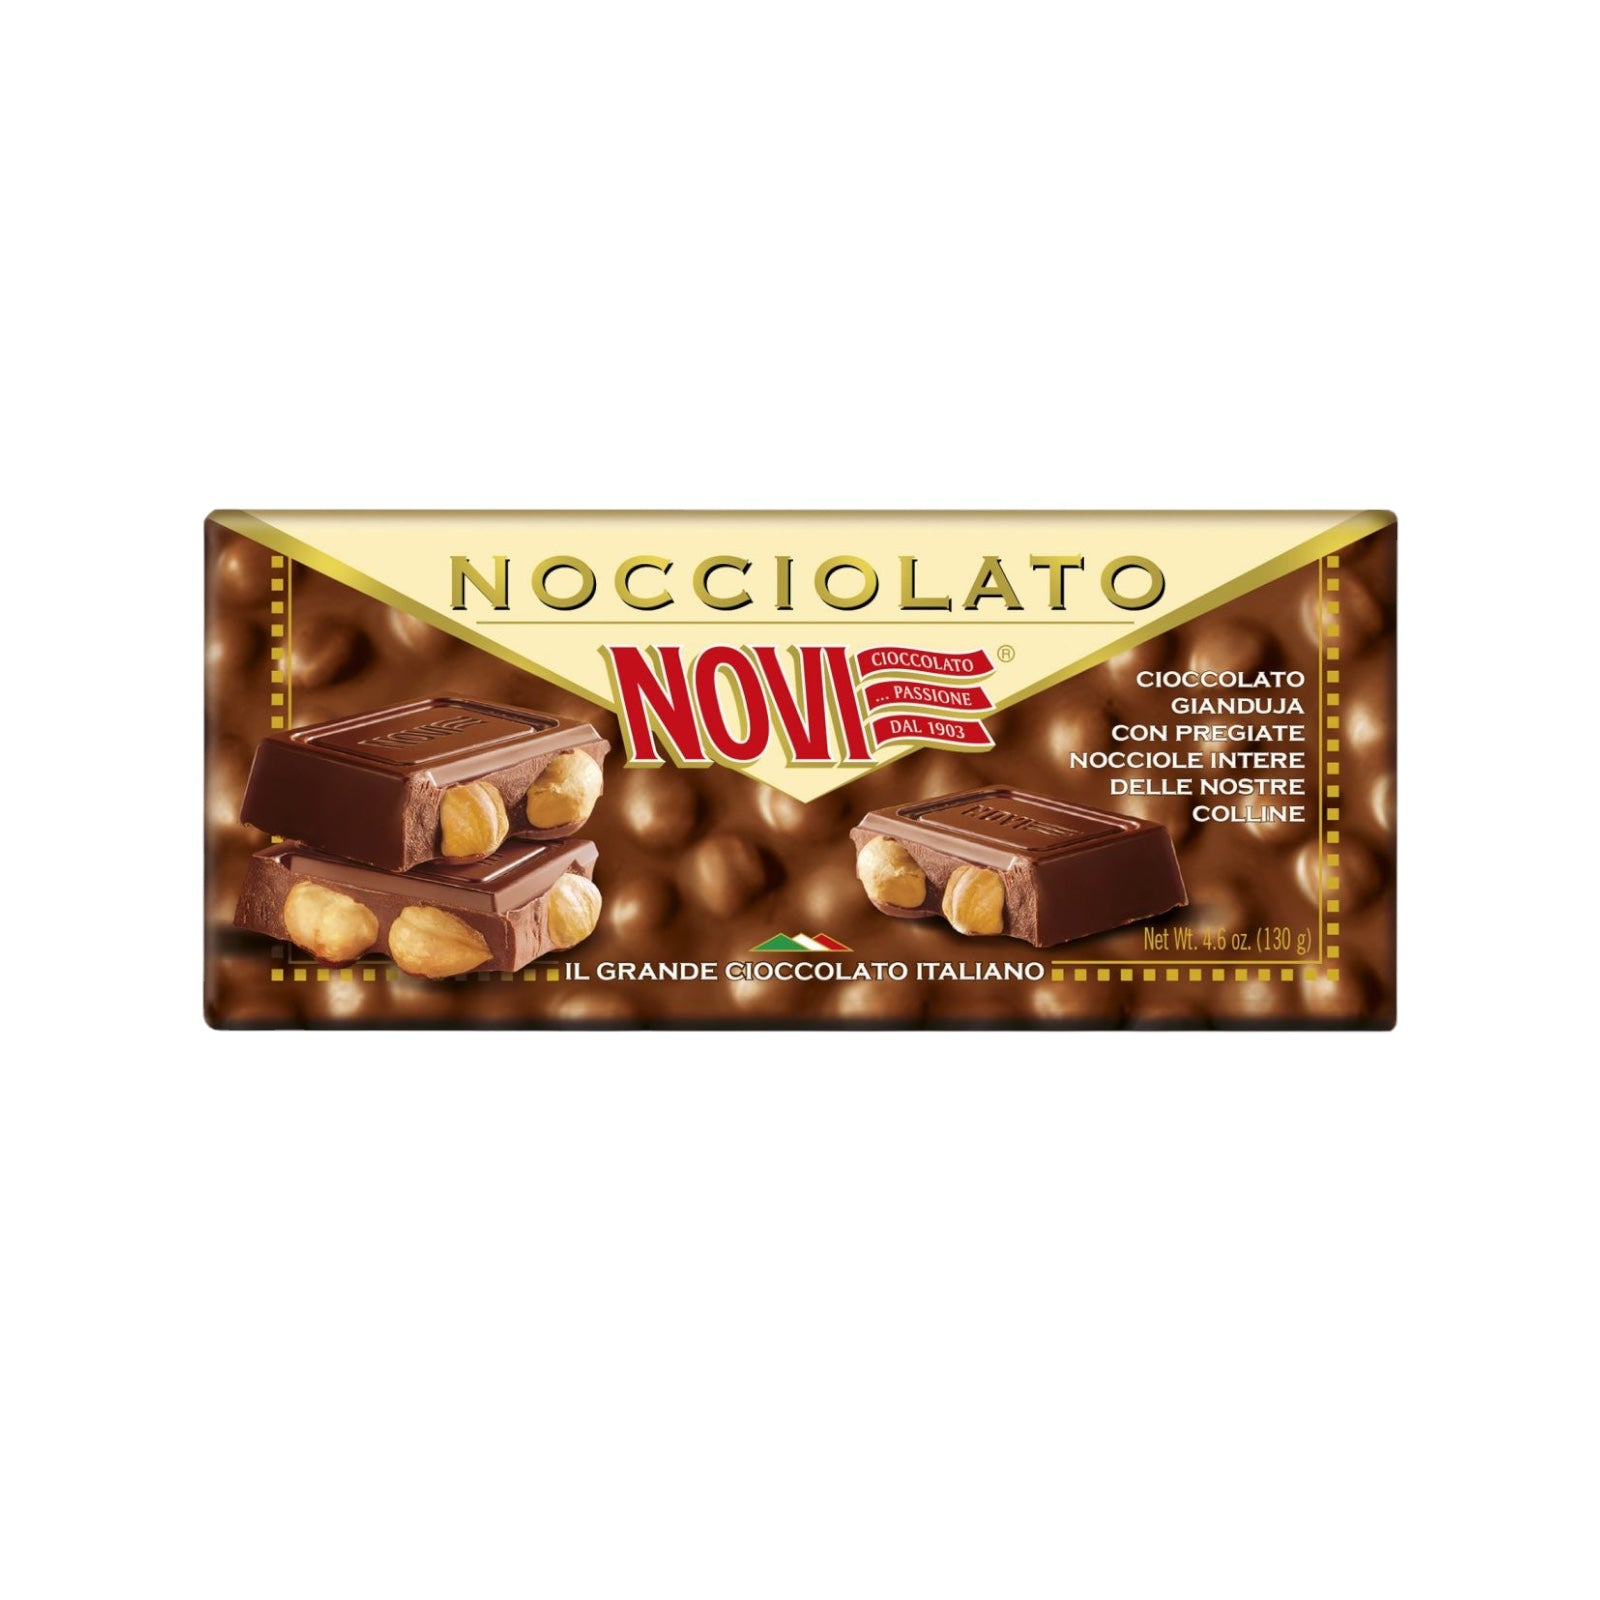 Novi Nocciolato Gianduja Chocolate with Whole Hazelnuts 230g – Made In  Eatalia